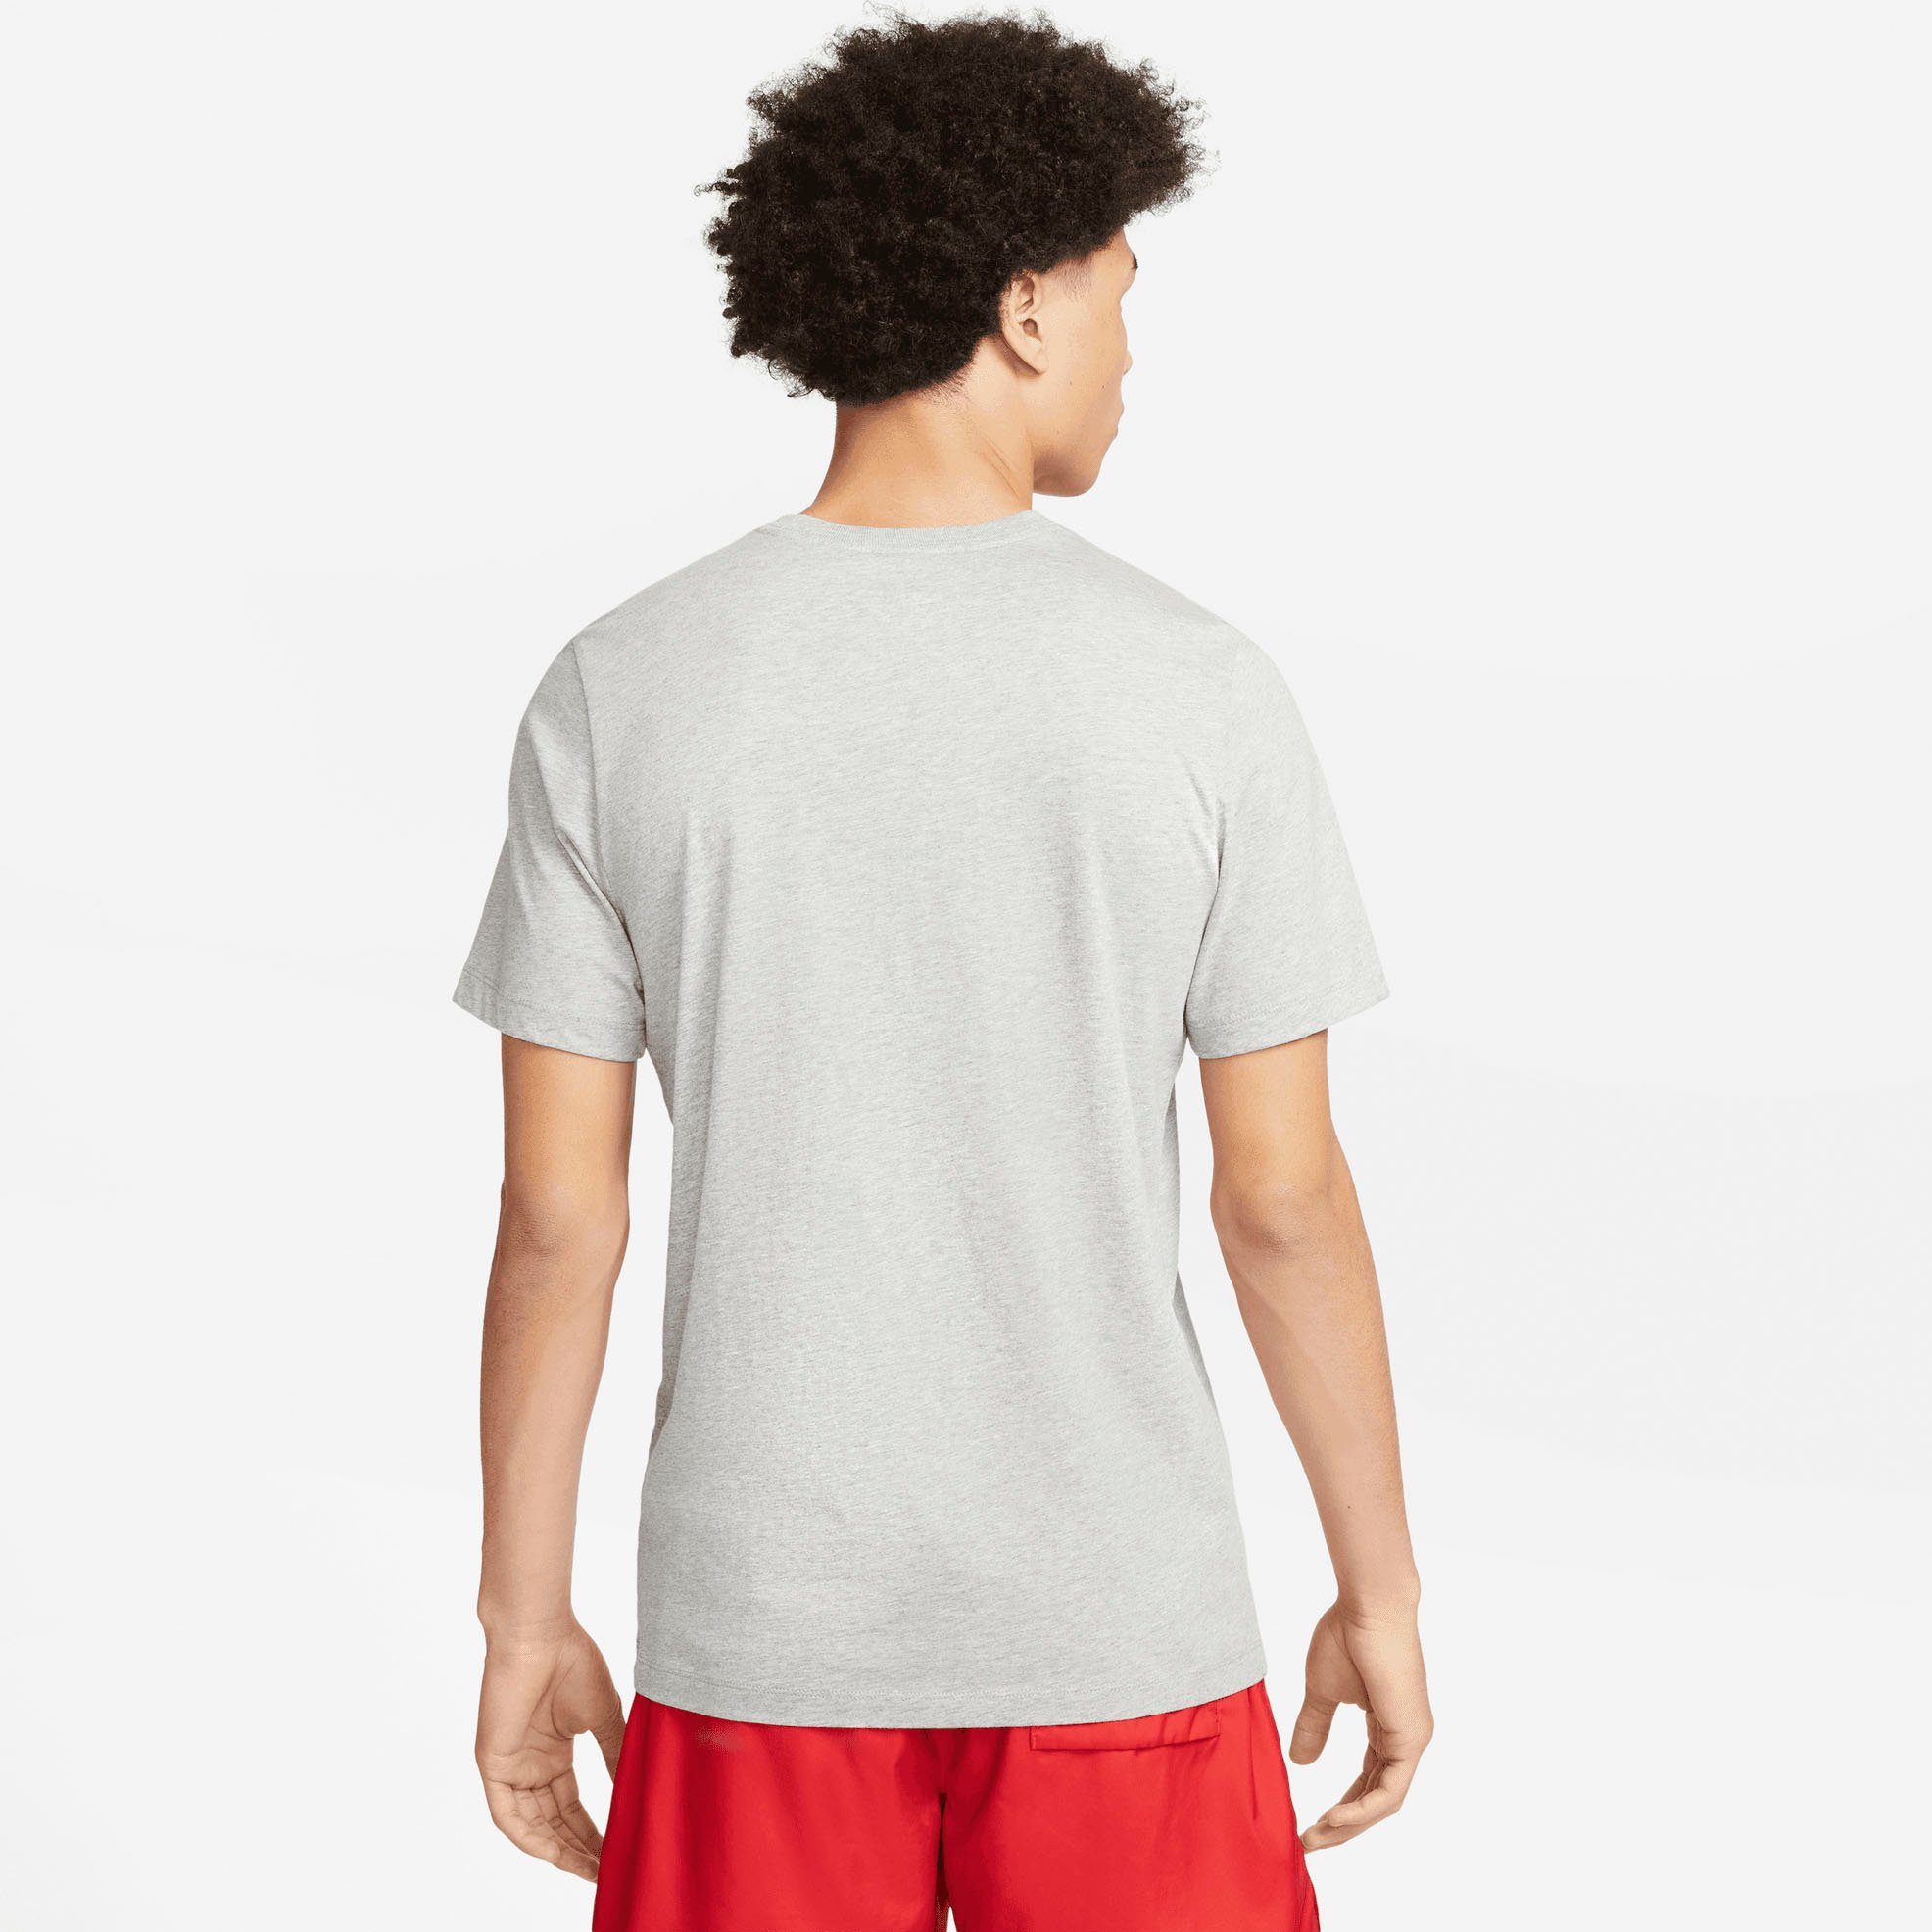 HEATHER DK T-Shirt Men's Nike Sportswear GREY T-Shirt